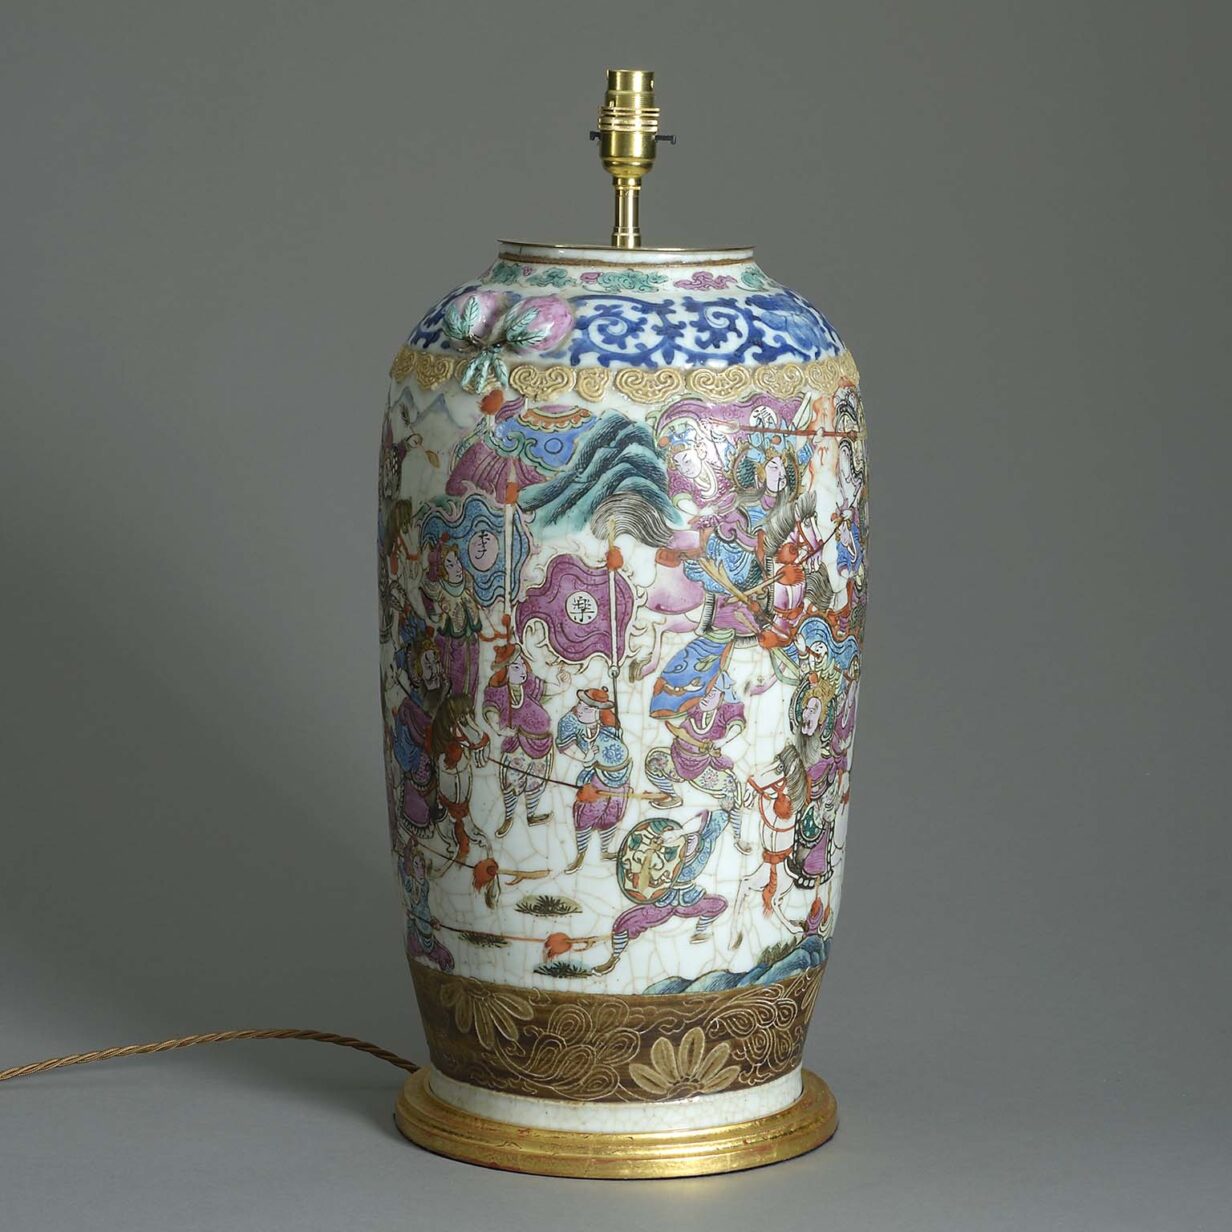 Pair of 19th century famille rose porcelain jar lamps